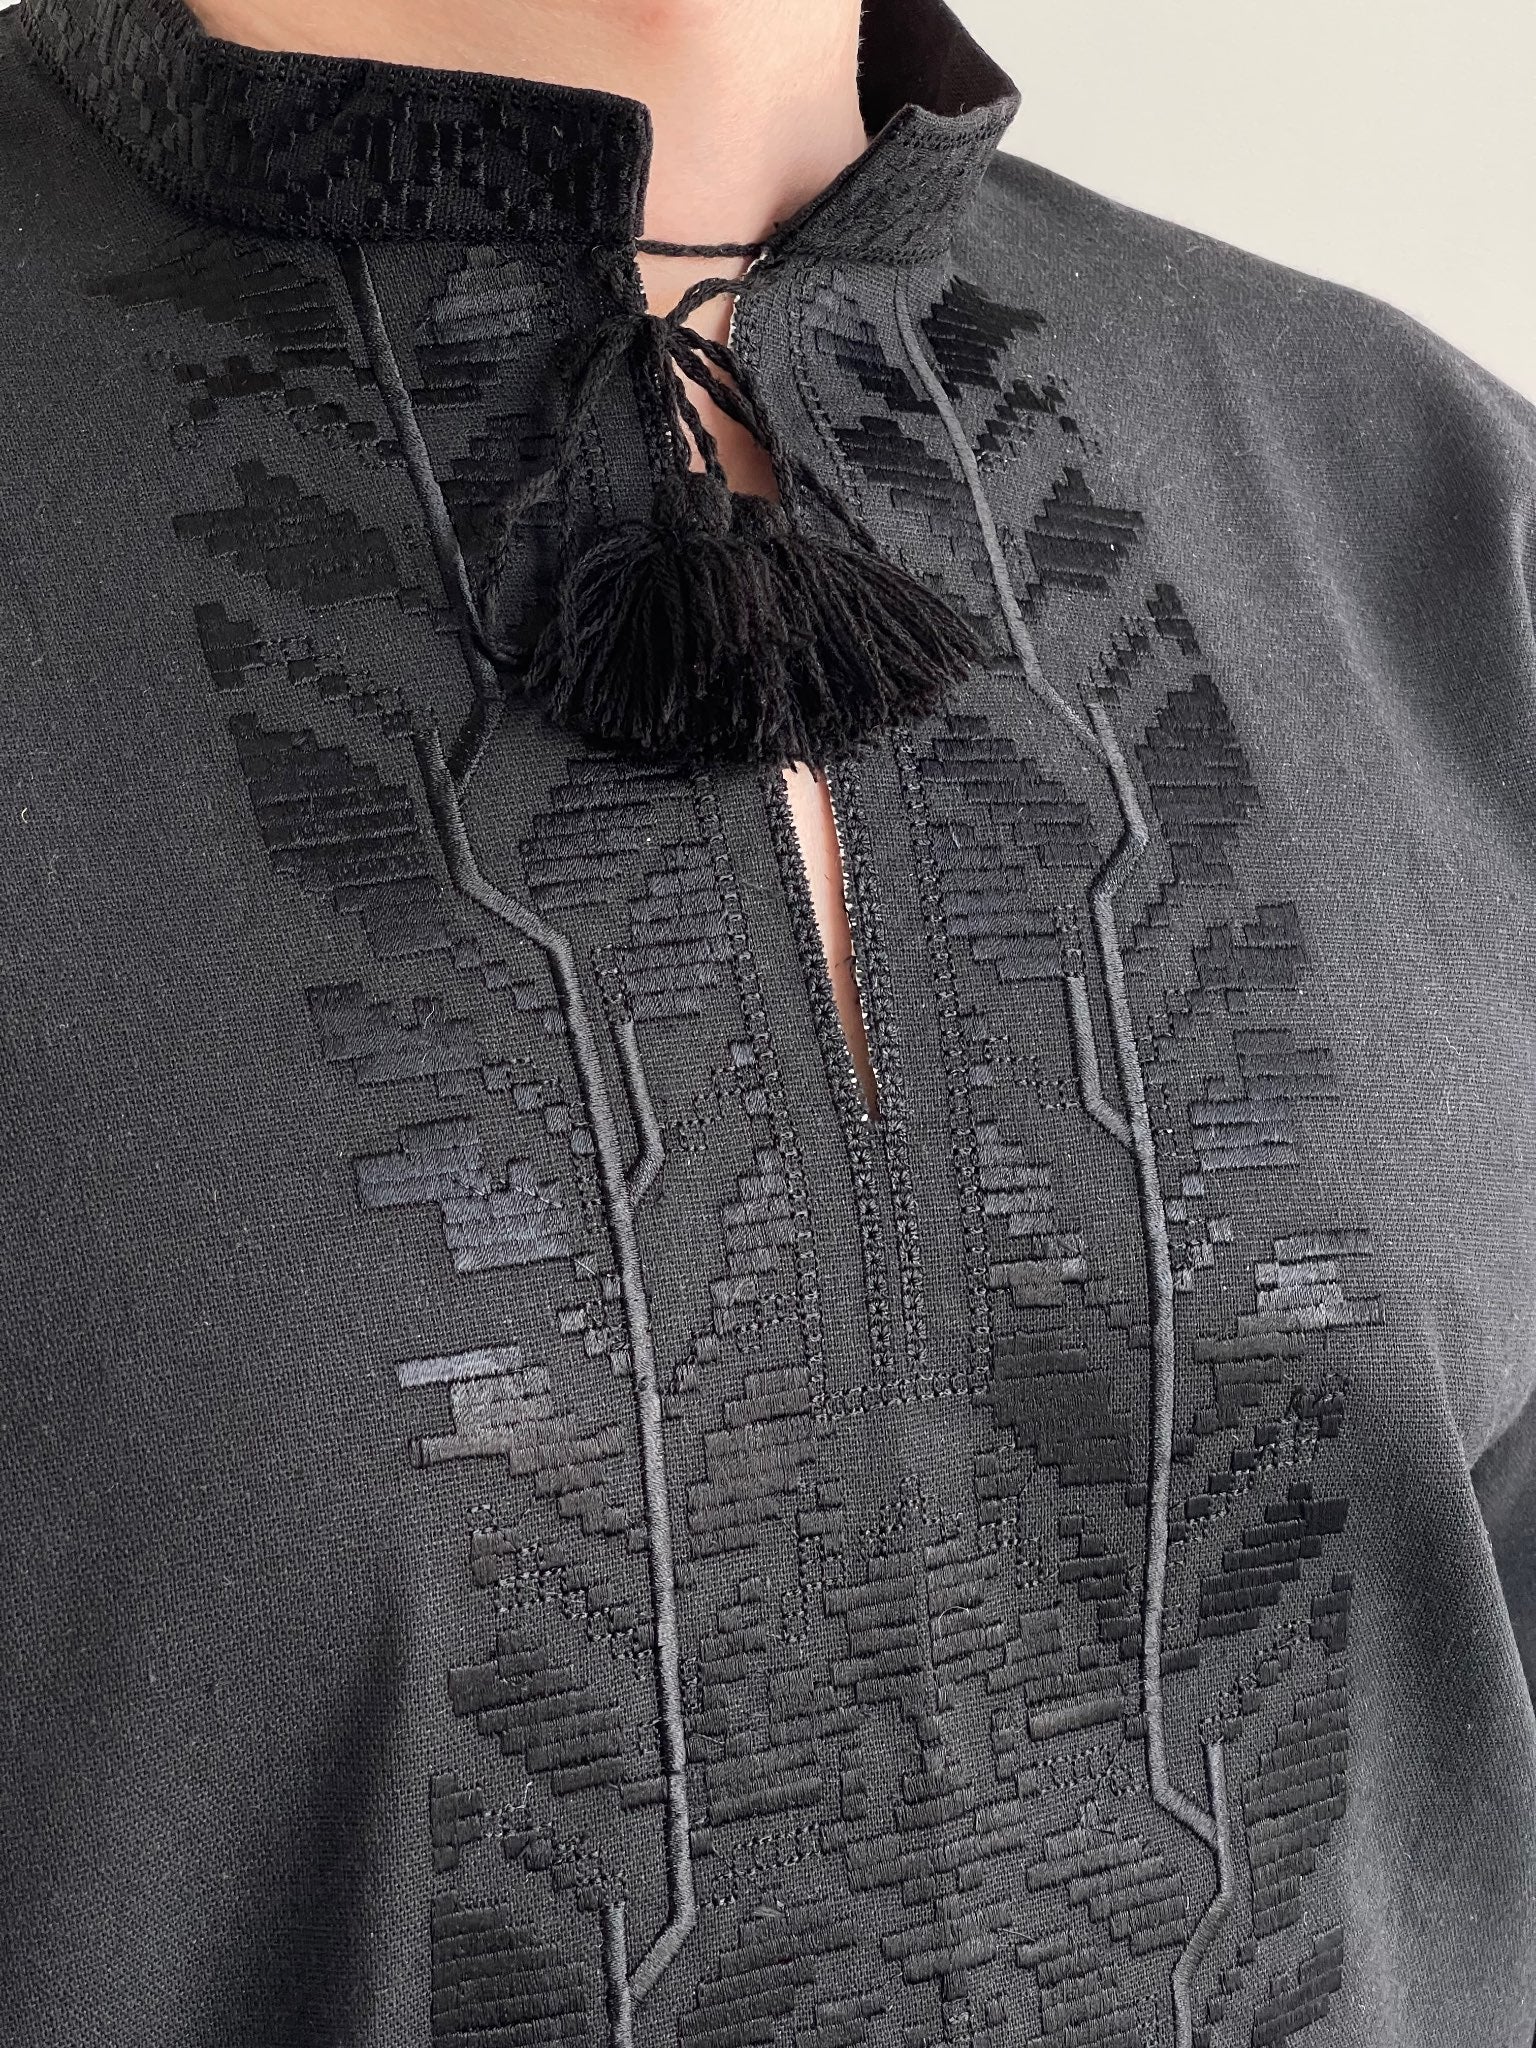 Long Sleeve Black Vyshyvanka Shirt with Black Embroidery and Ukrainian Symbol (Чоловіча Вишиванка)